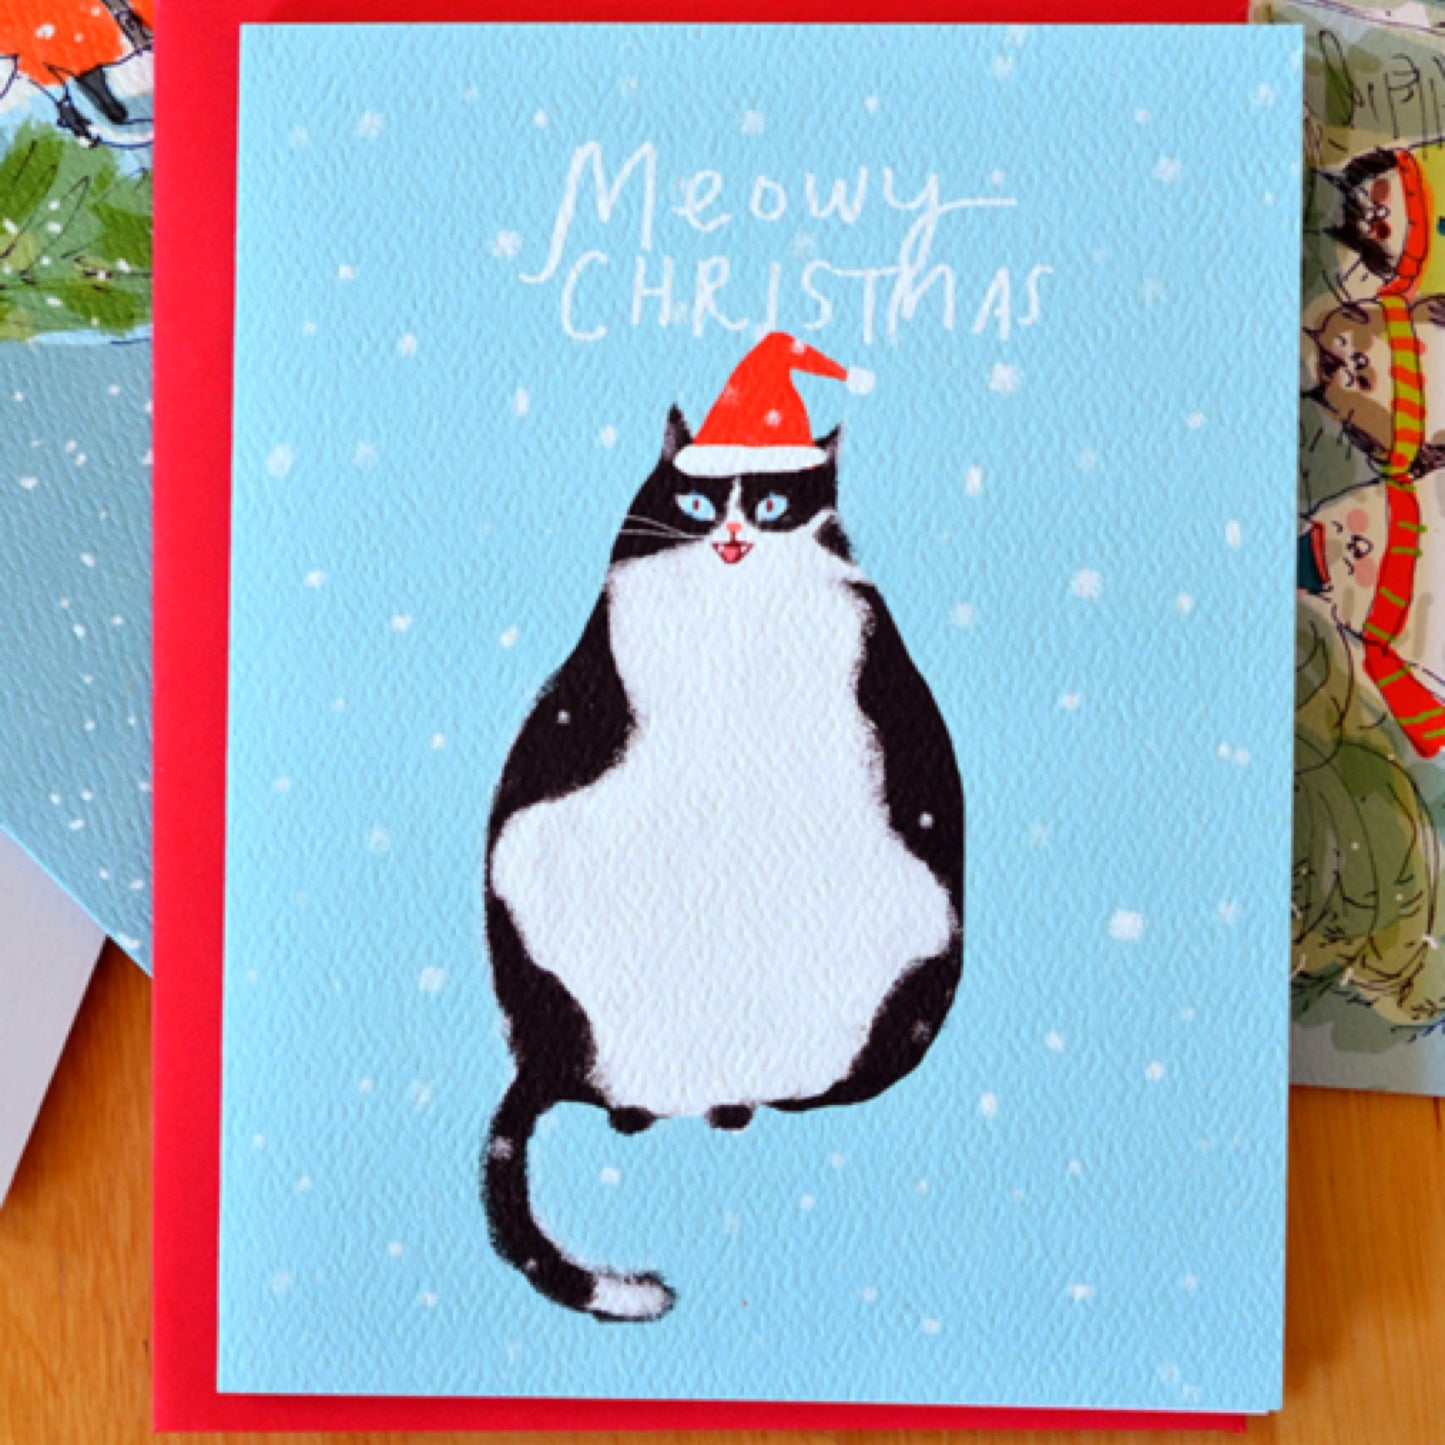 Meowy Christmas Tuxedo Cat Card